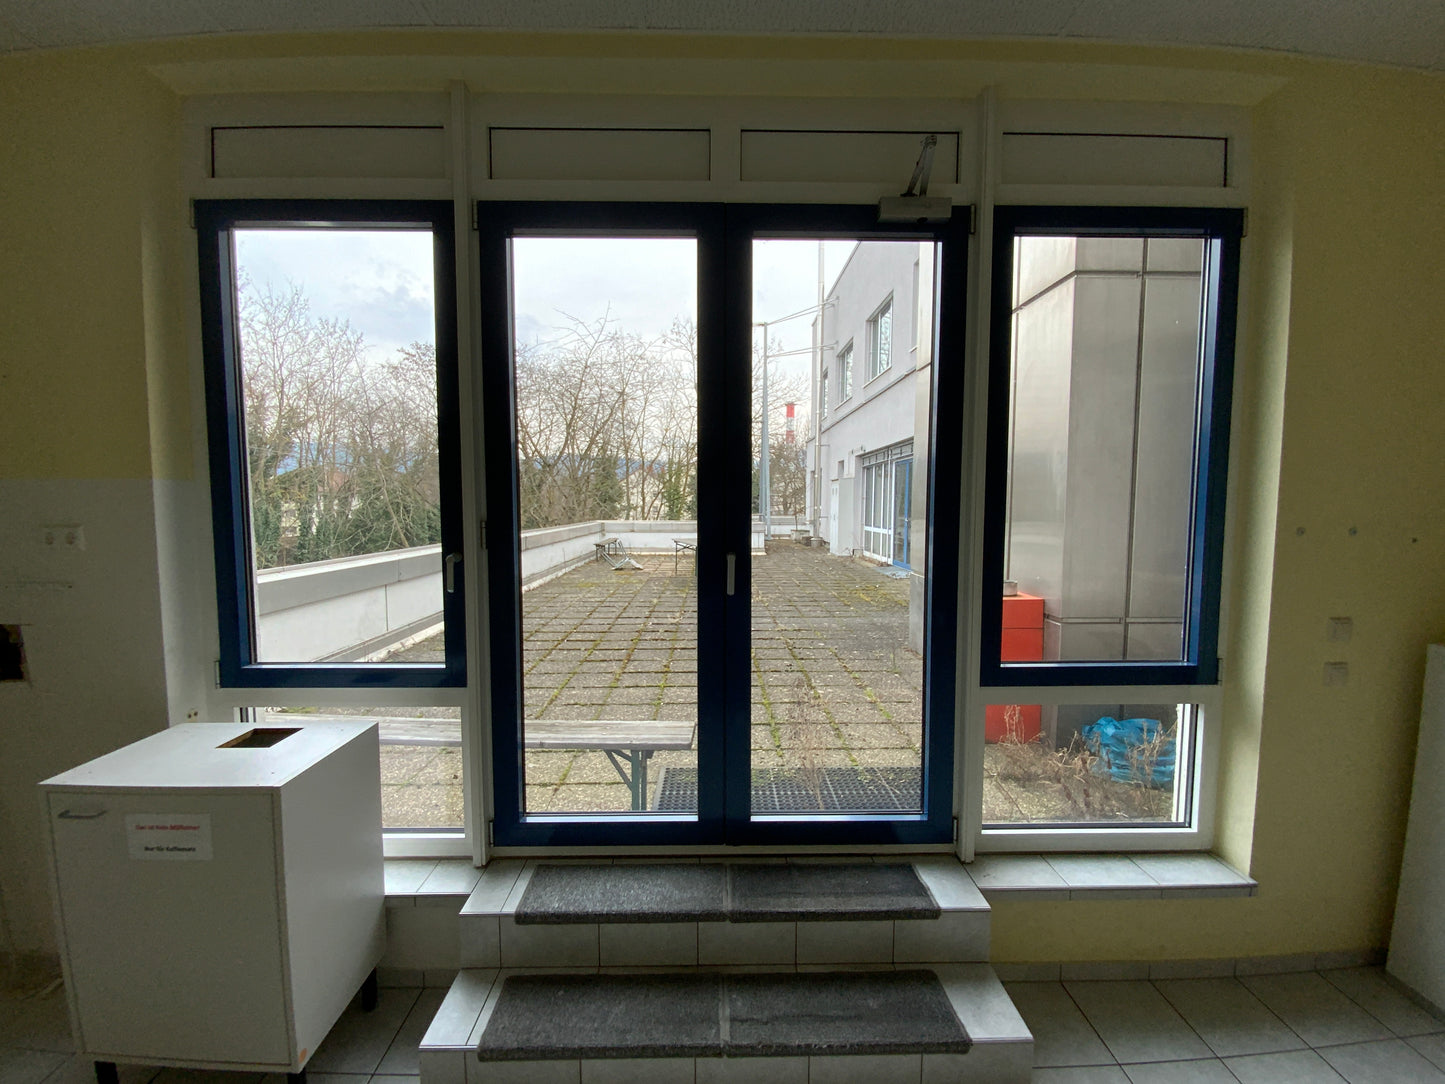 1-flüglige Fenster Schüco International KG 980x2580x80